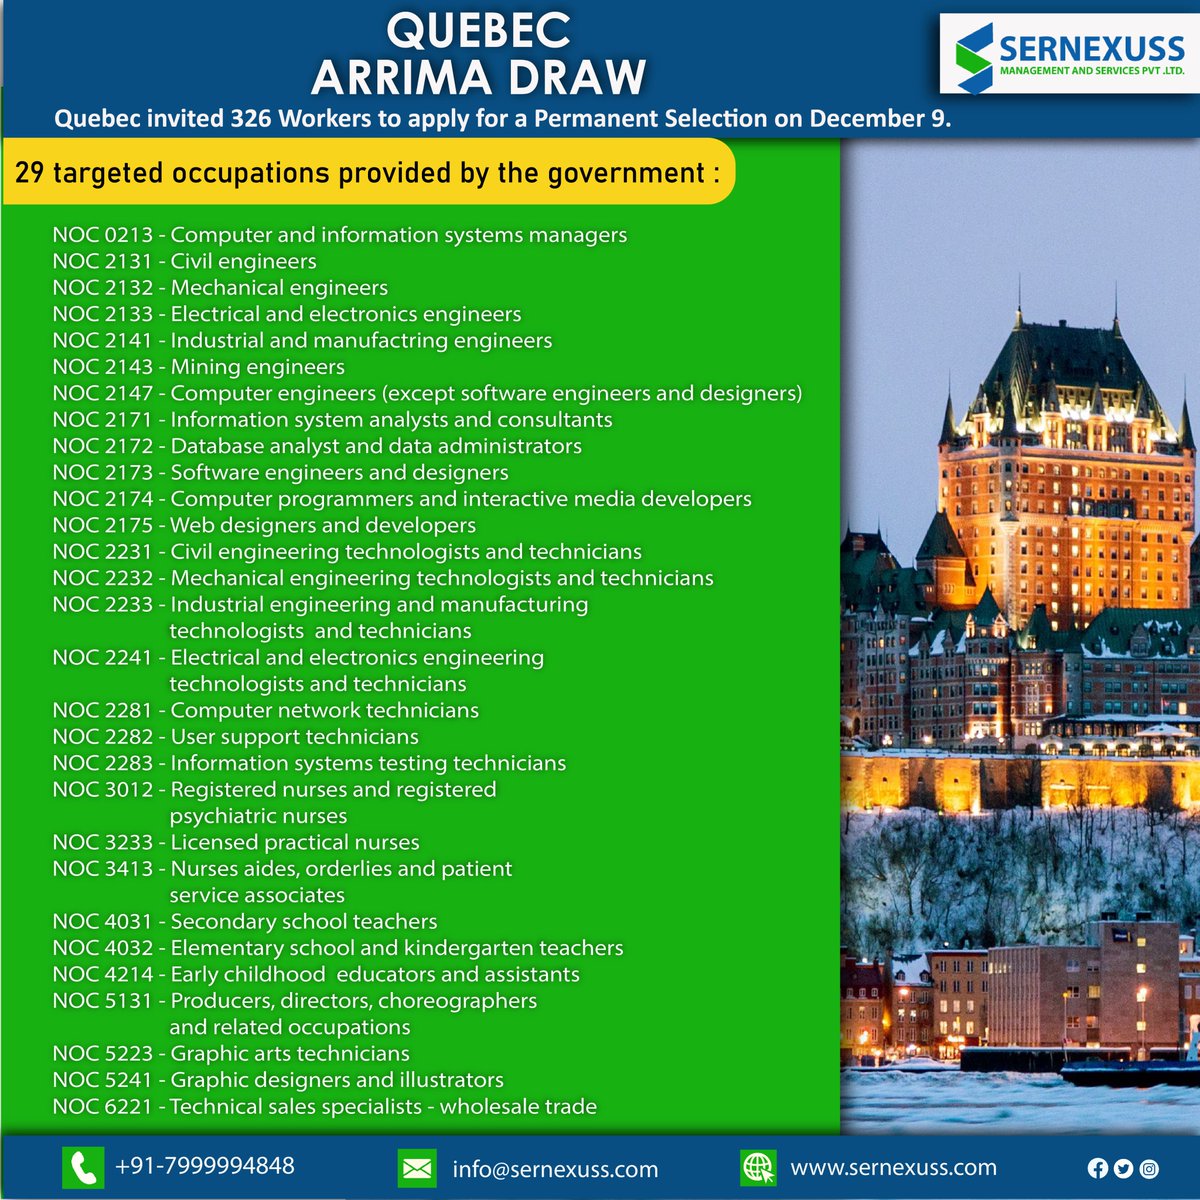 Quebec invites 326 in new Arrima draw.

click more: bit.ly/3yJNjzk

#Quebecimmigration #Quebecarrimadraw #canadaimmigration #canadaskilledworker #migratetocanada #sernexuss